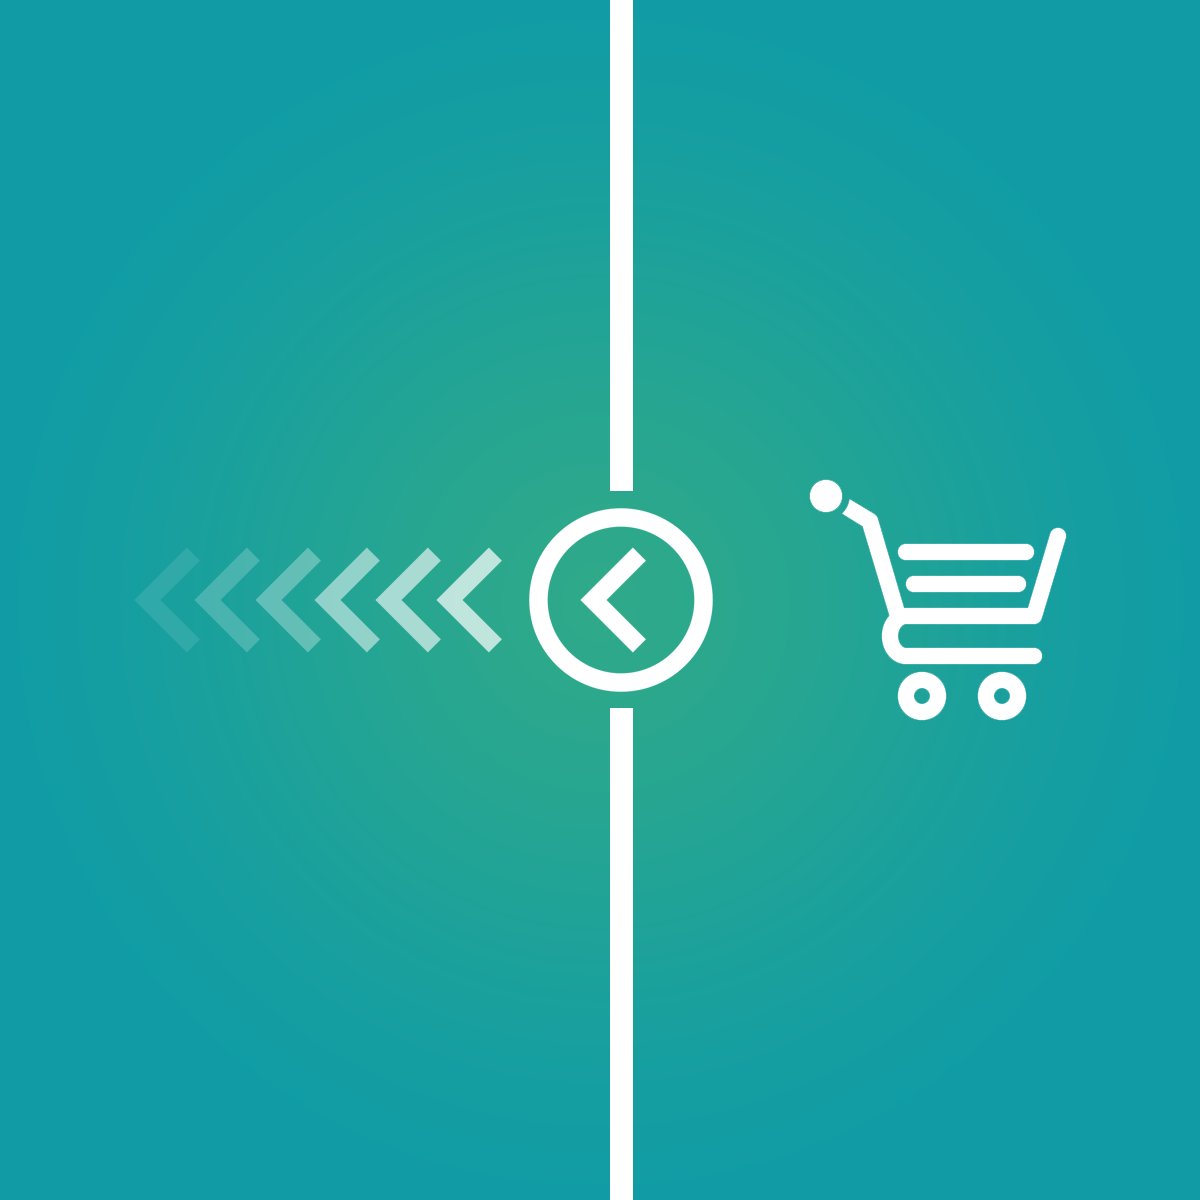 QeCart ‑ Slide Out Cart Shopify App